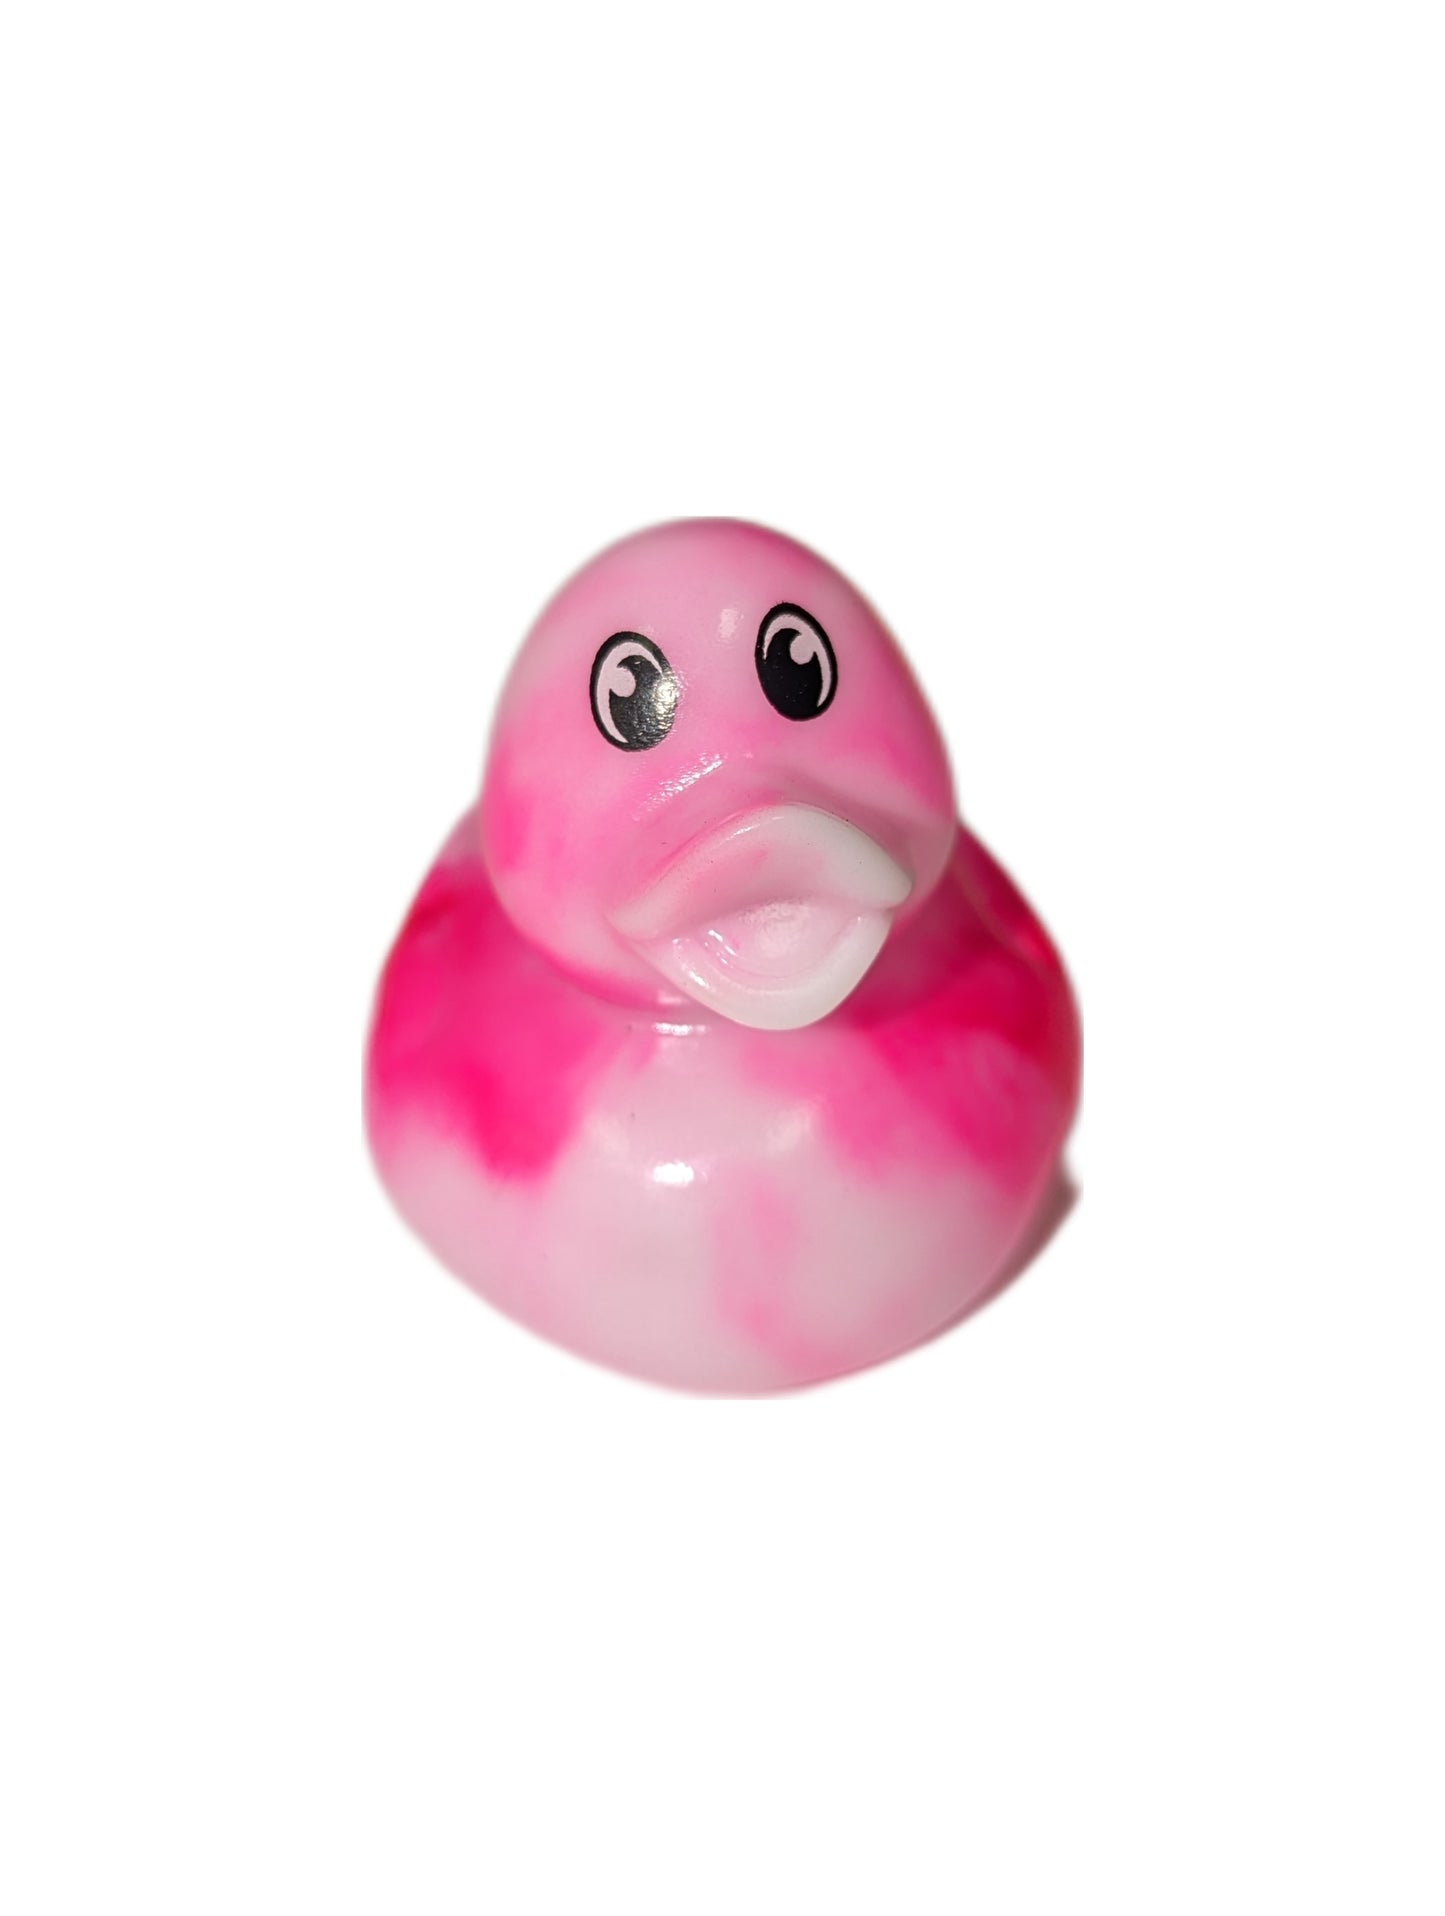 10 Marbled Pink Ducks - 2" Rubber Ducks